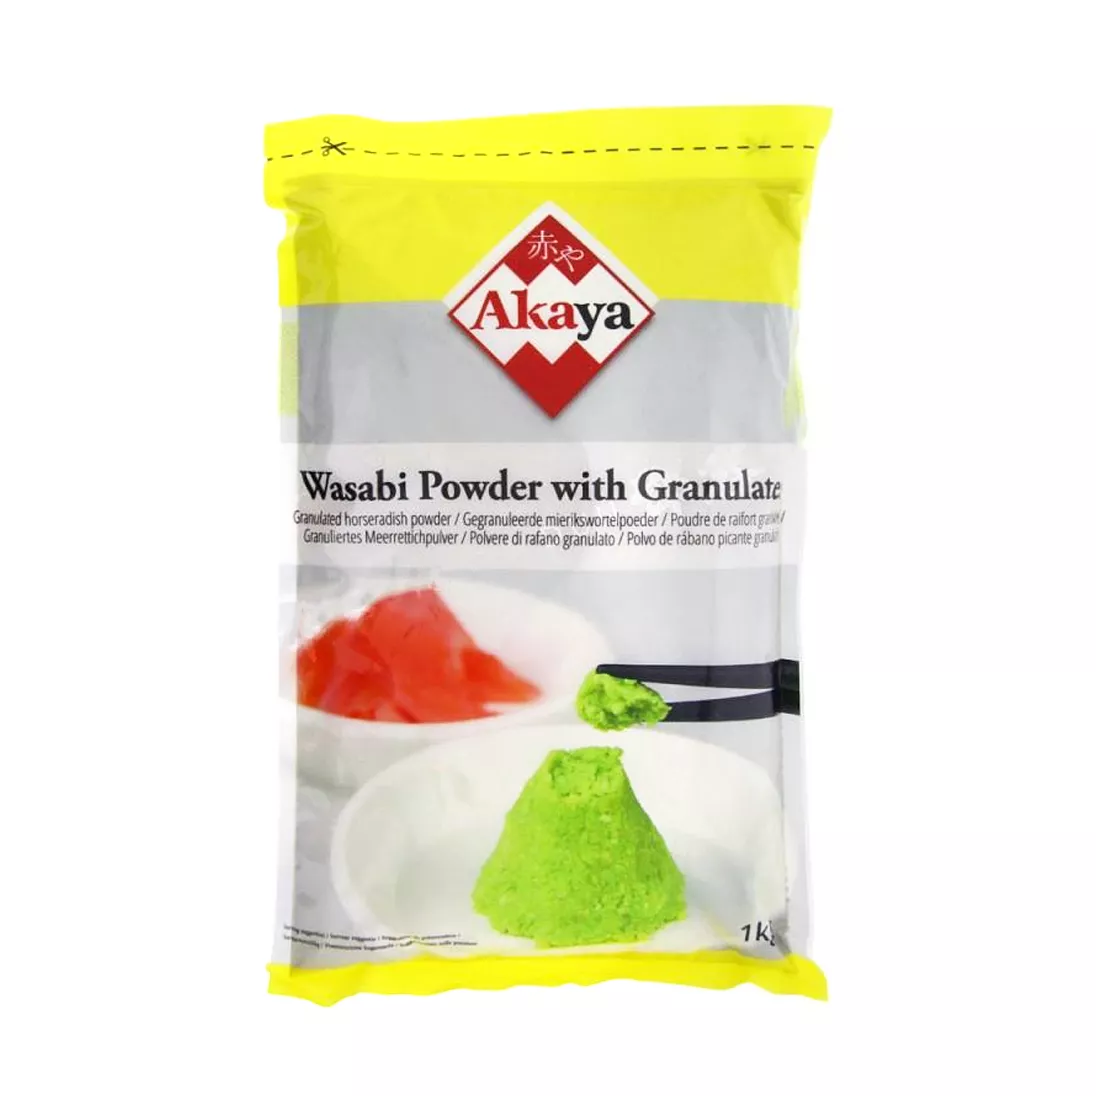 Pudra wasabi granulat OKAYA 1kg, [],asianfood.ro